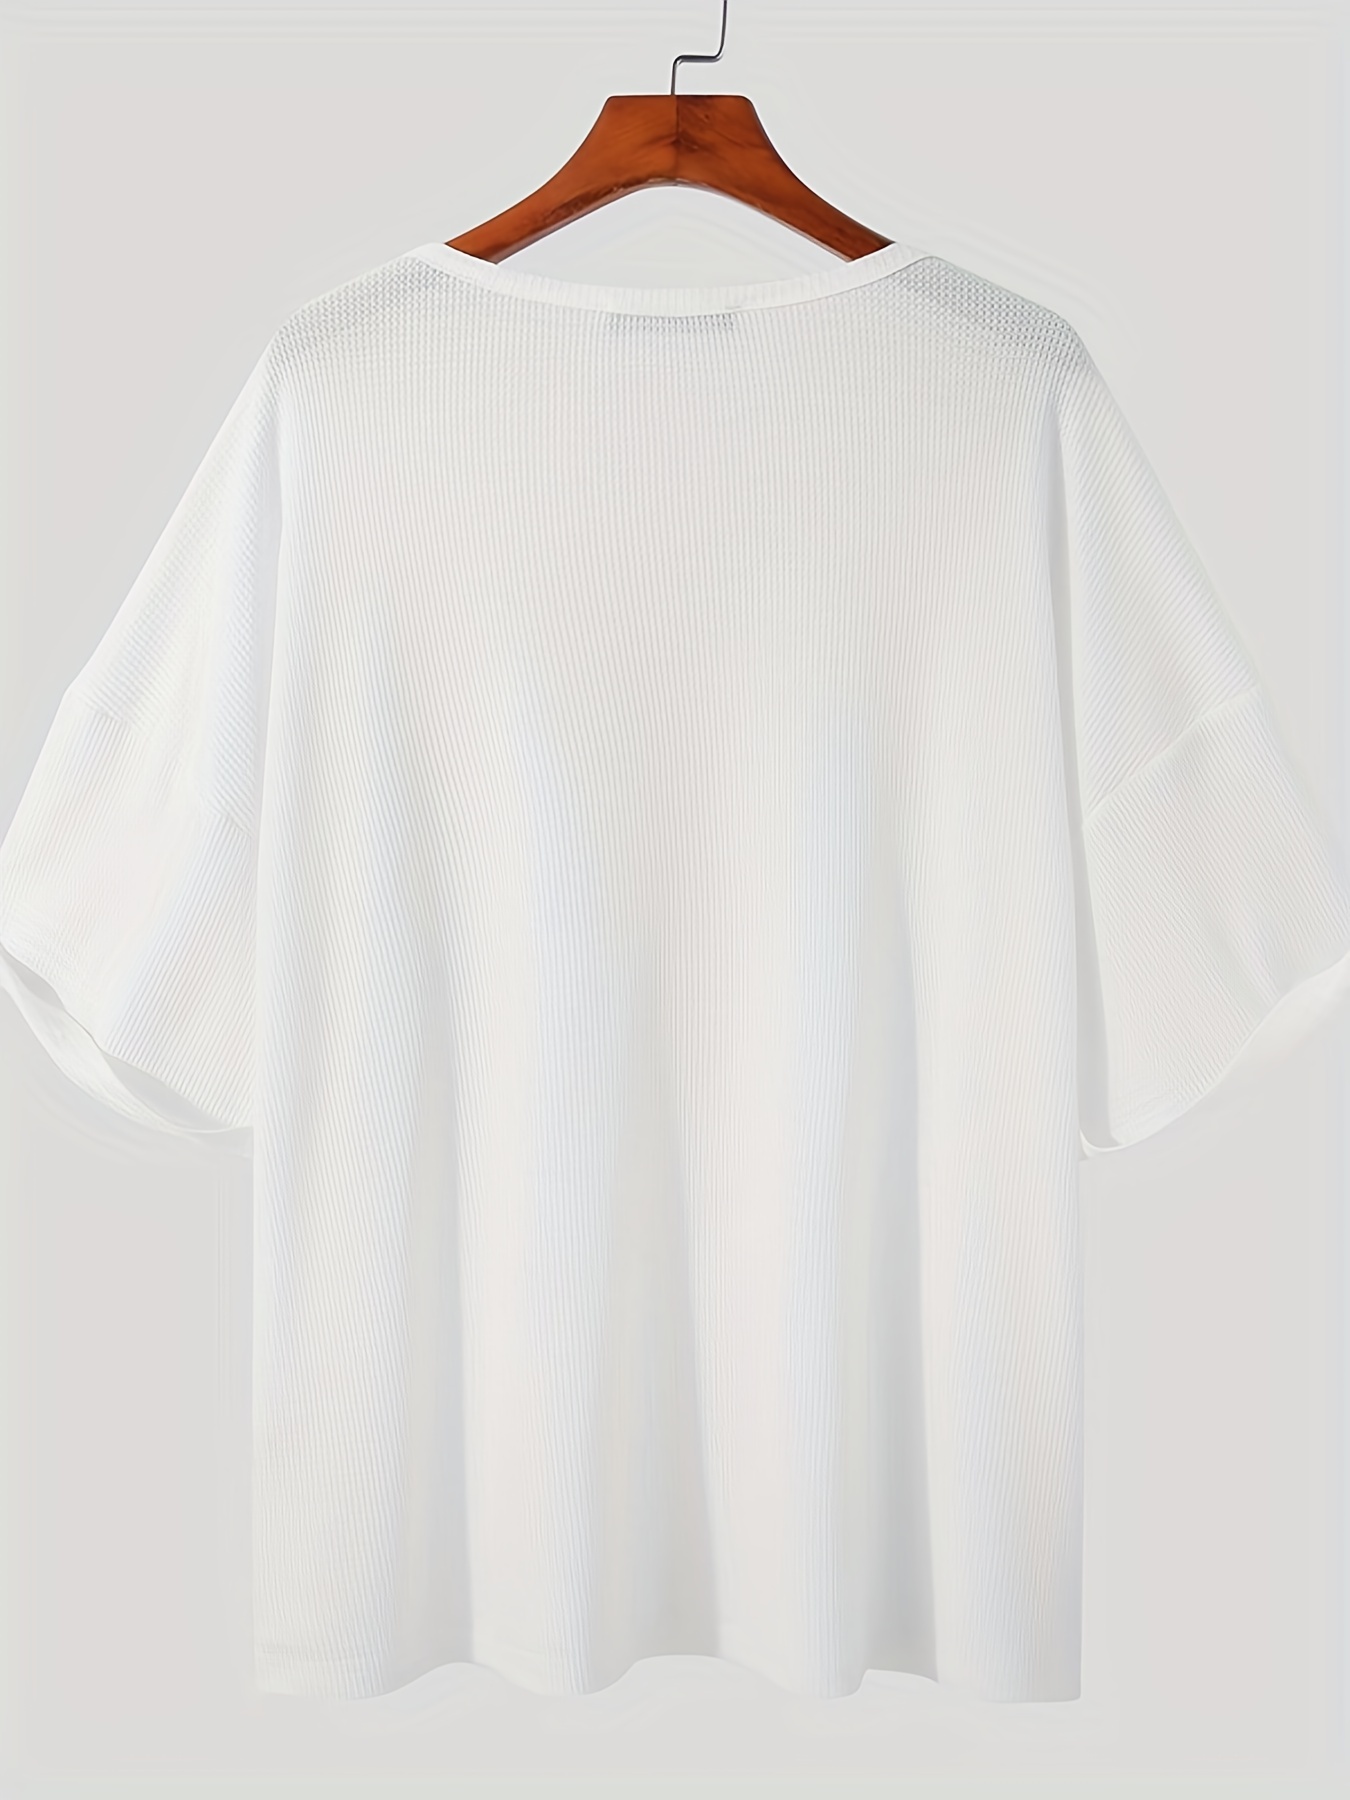 Women's Plus Size Drop Shoulder Loose Long Sleeve Sports Tee Oversized  Shirt 2XL(16)